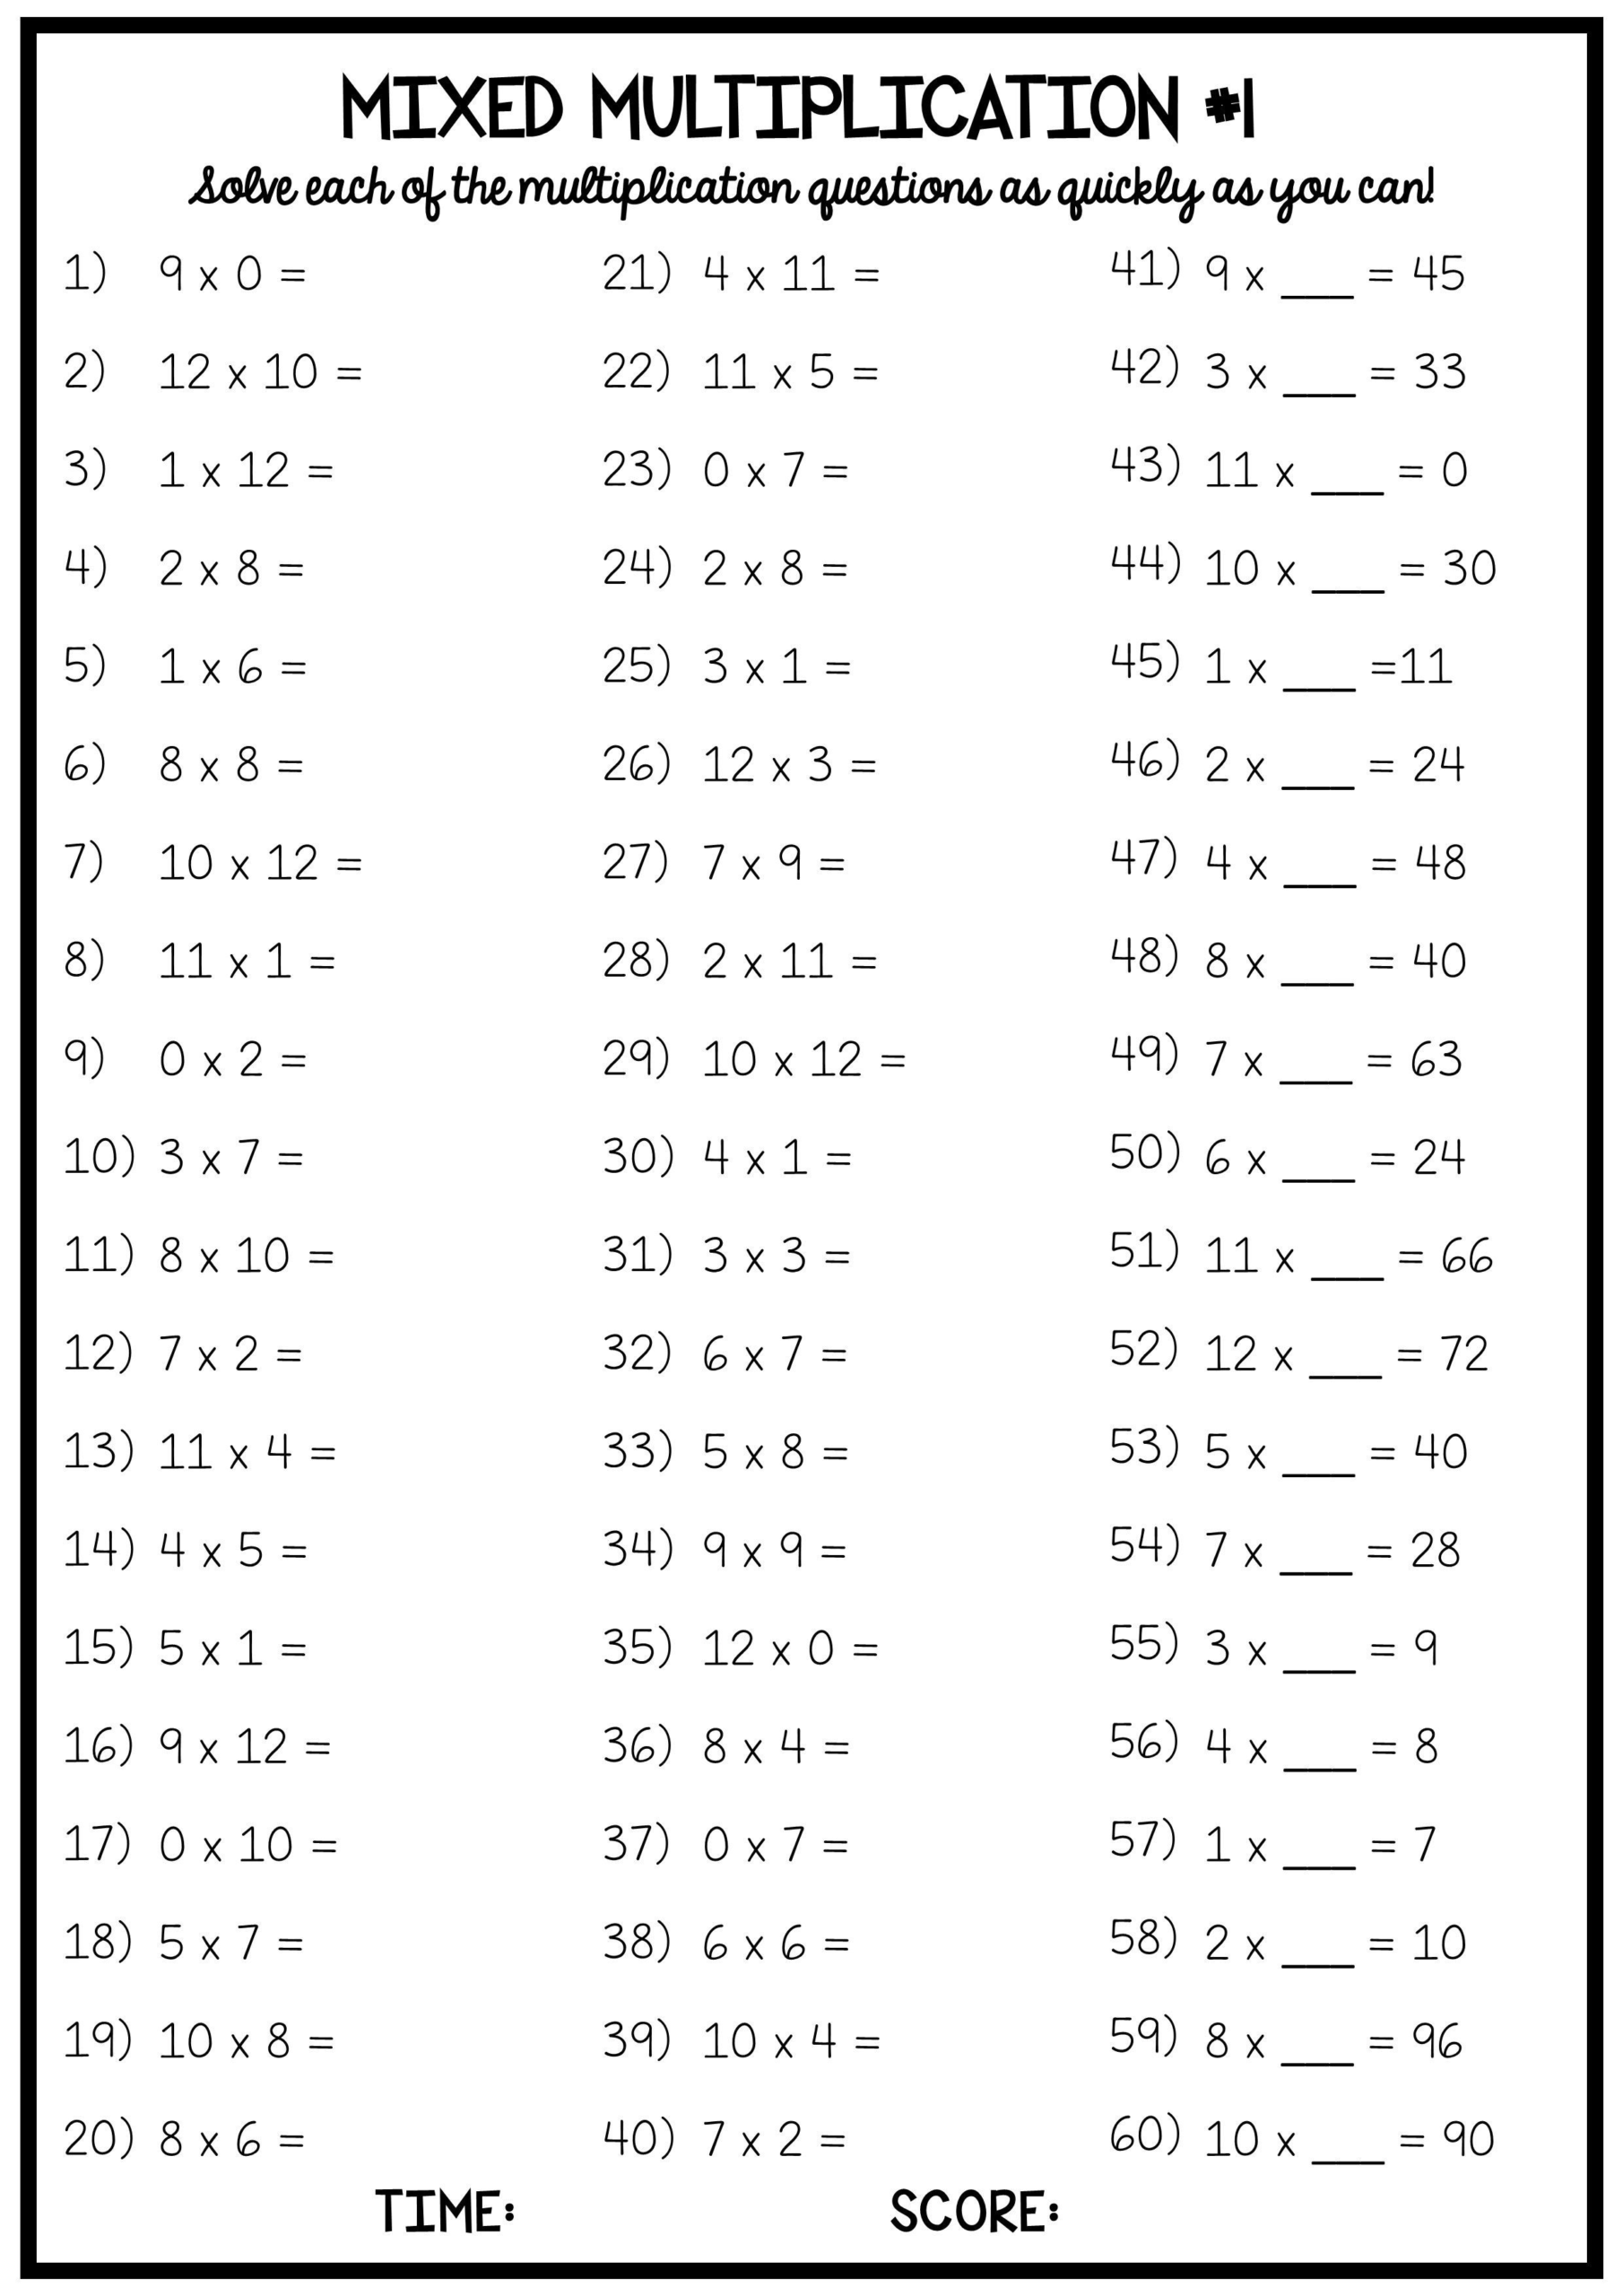 Multiplication Times Tables Worksheets 4 | Printable in Multiplication Worksheets 4S